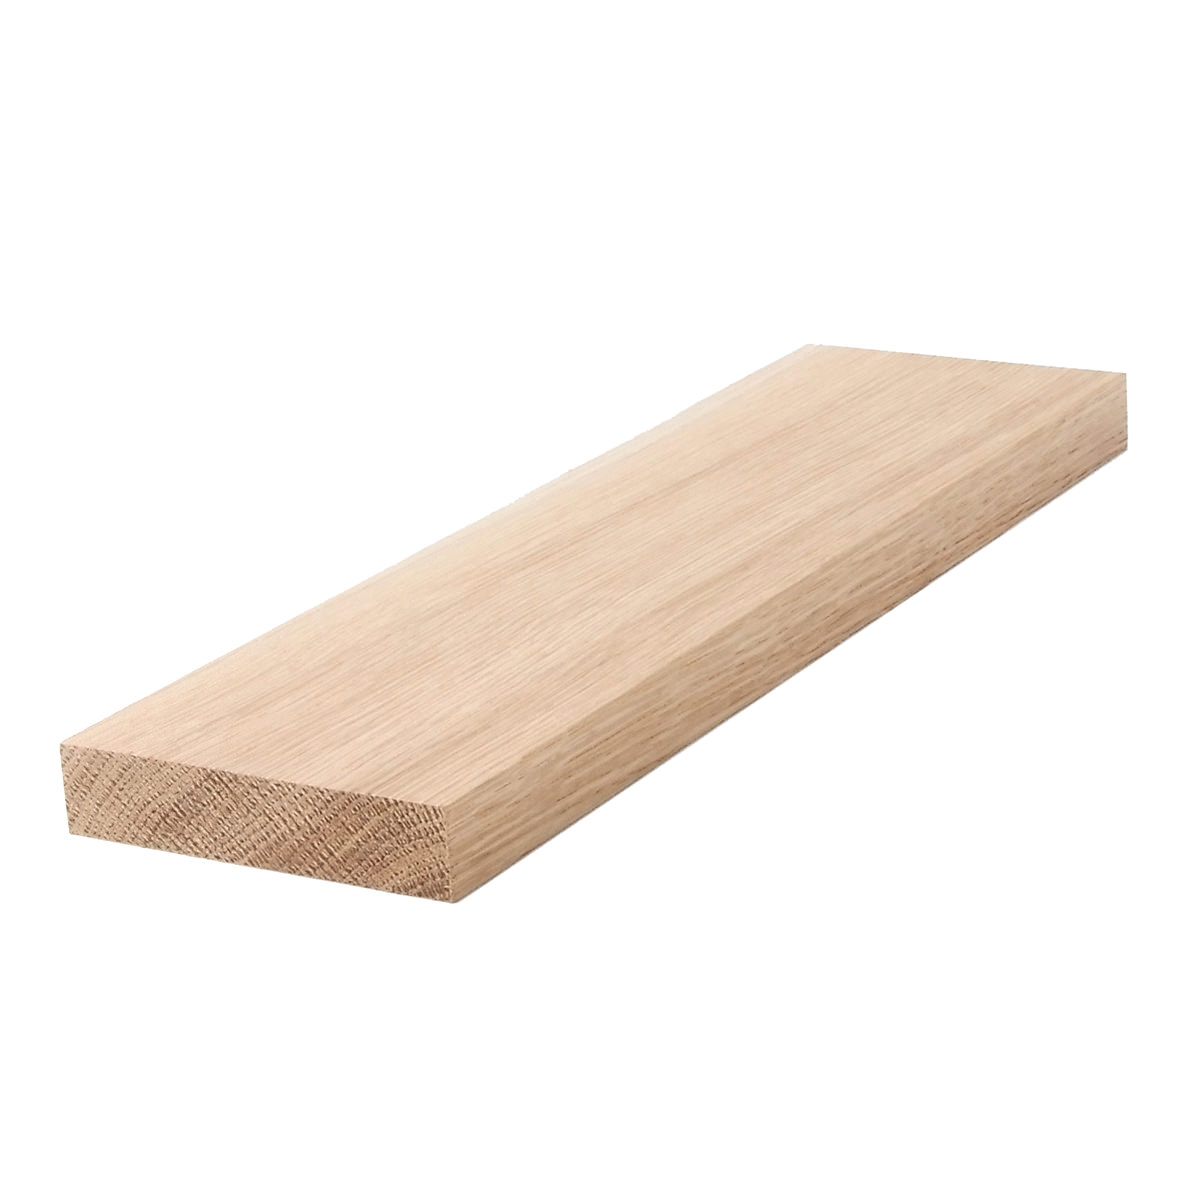 1 X 4 Ponderosa Pine Board